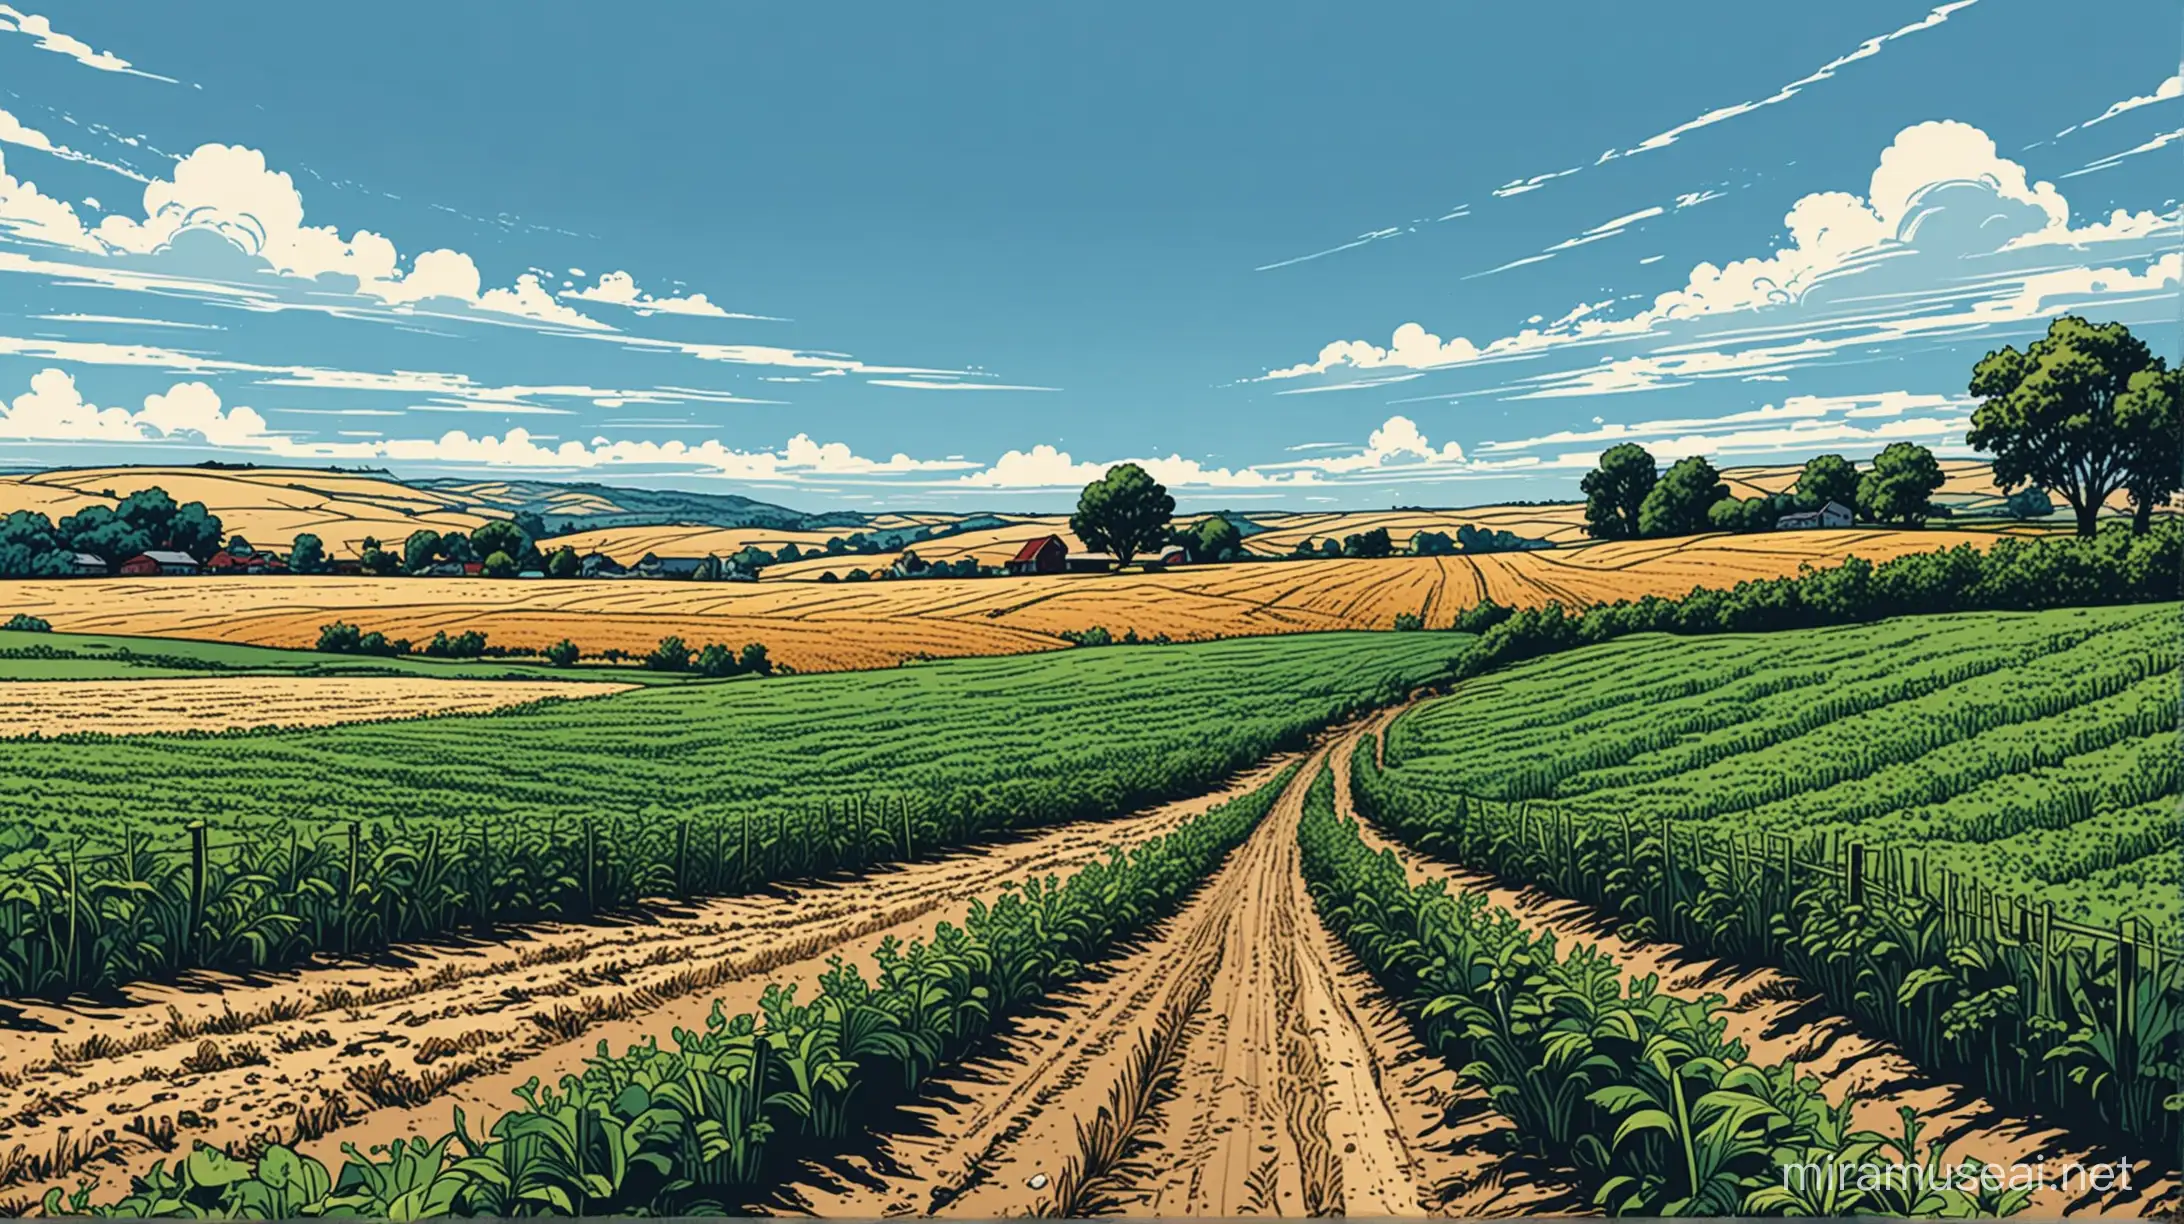 Farmland fields clear blue skies no clouds
comic book style illustration 300dpi